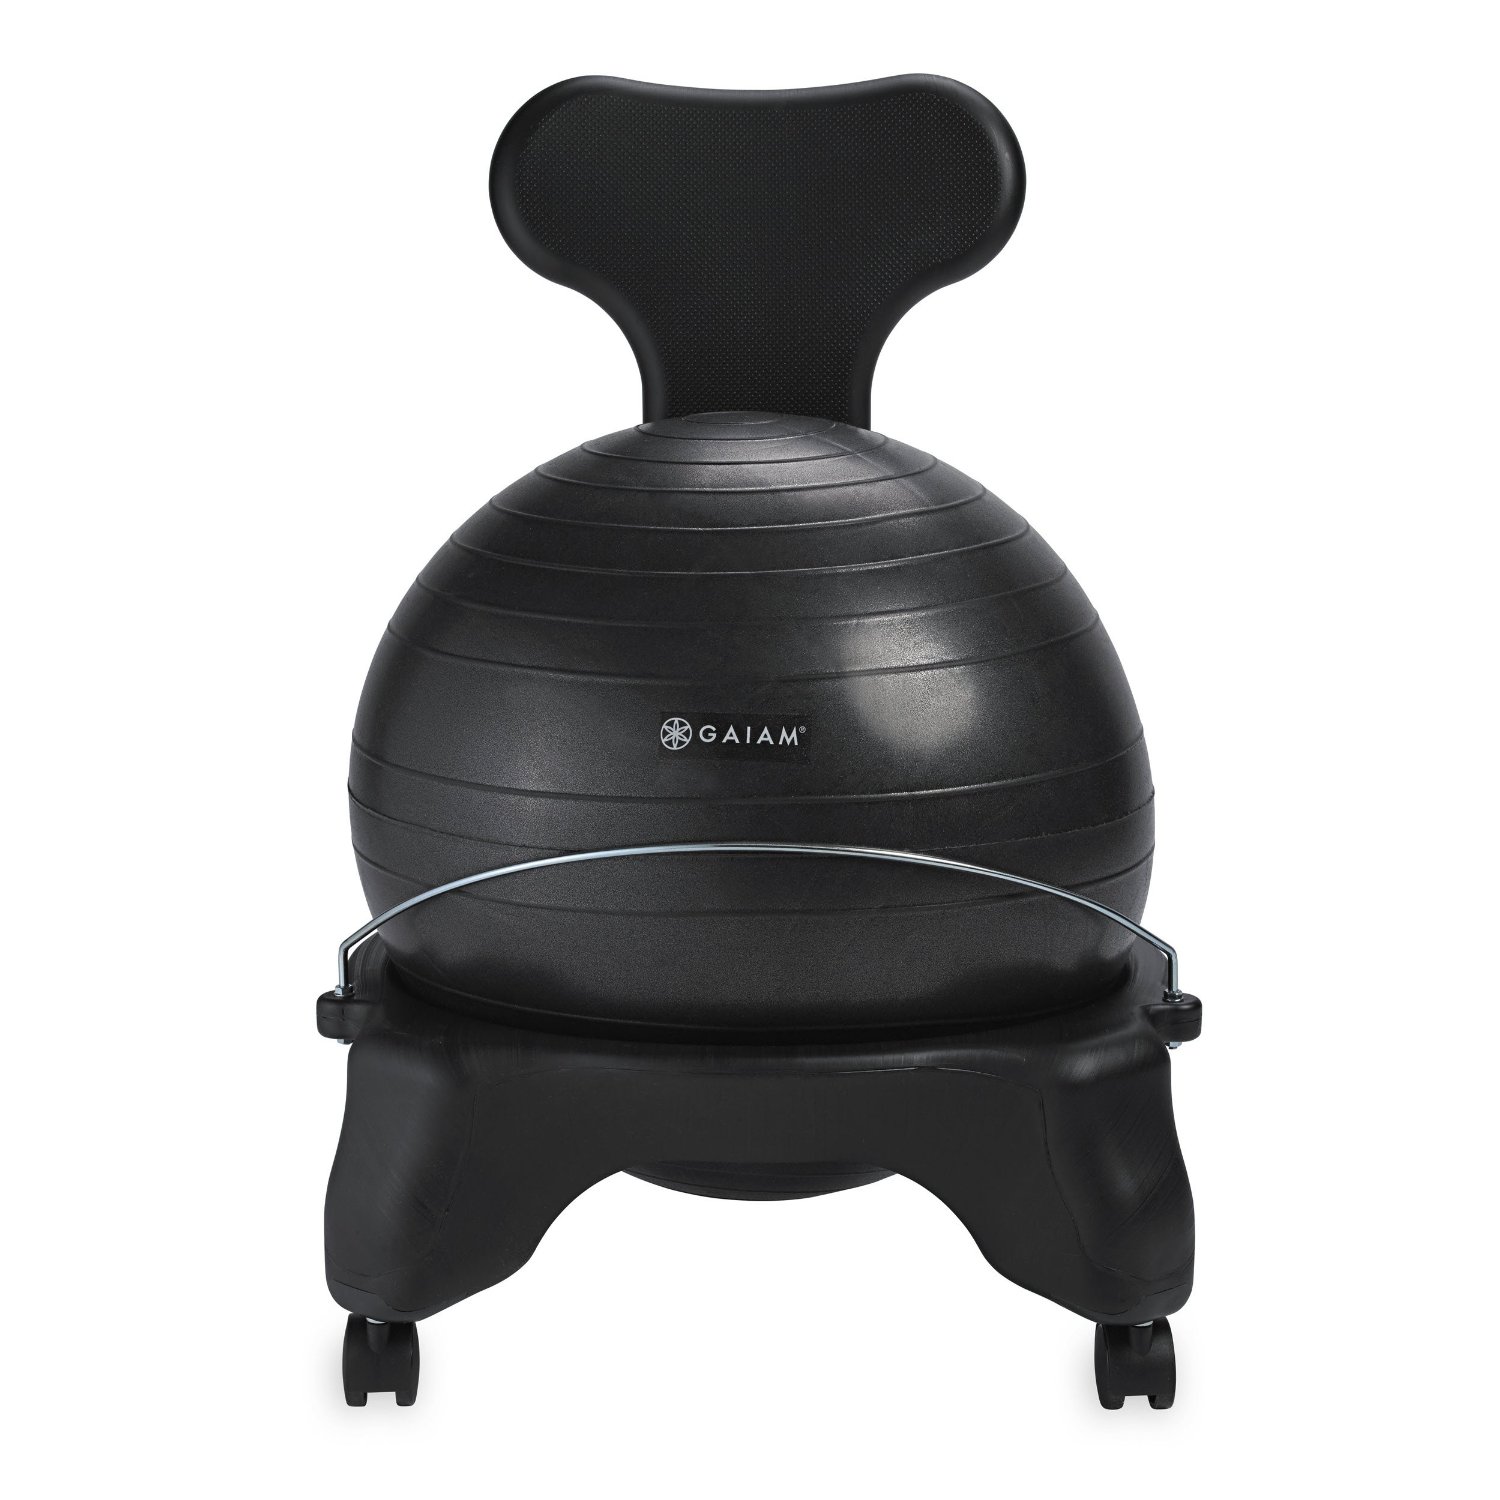 Gaiam Balance Ball Chairs – Just $59.79!